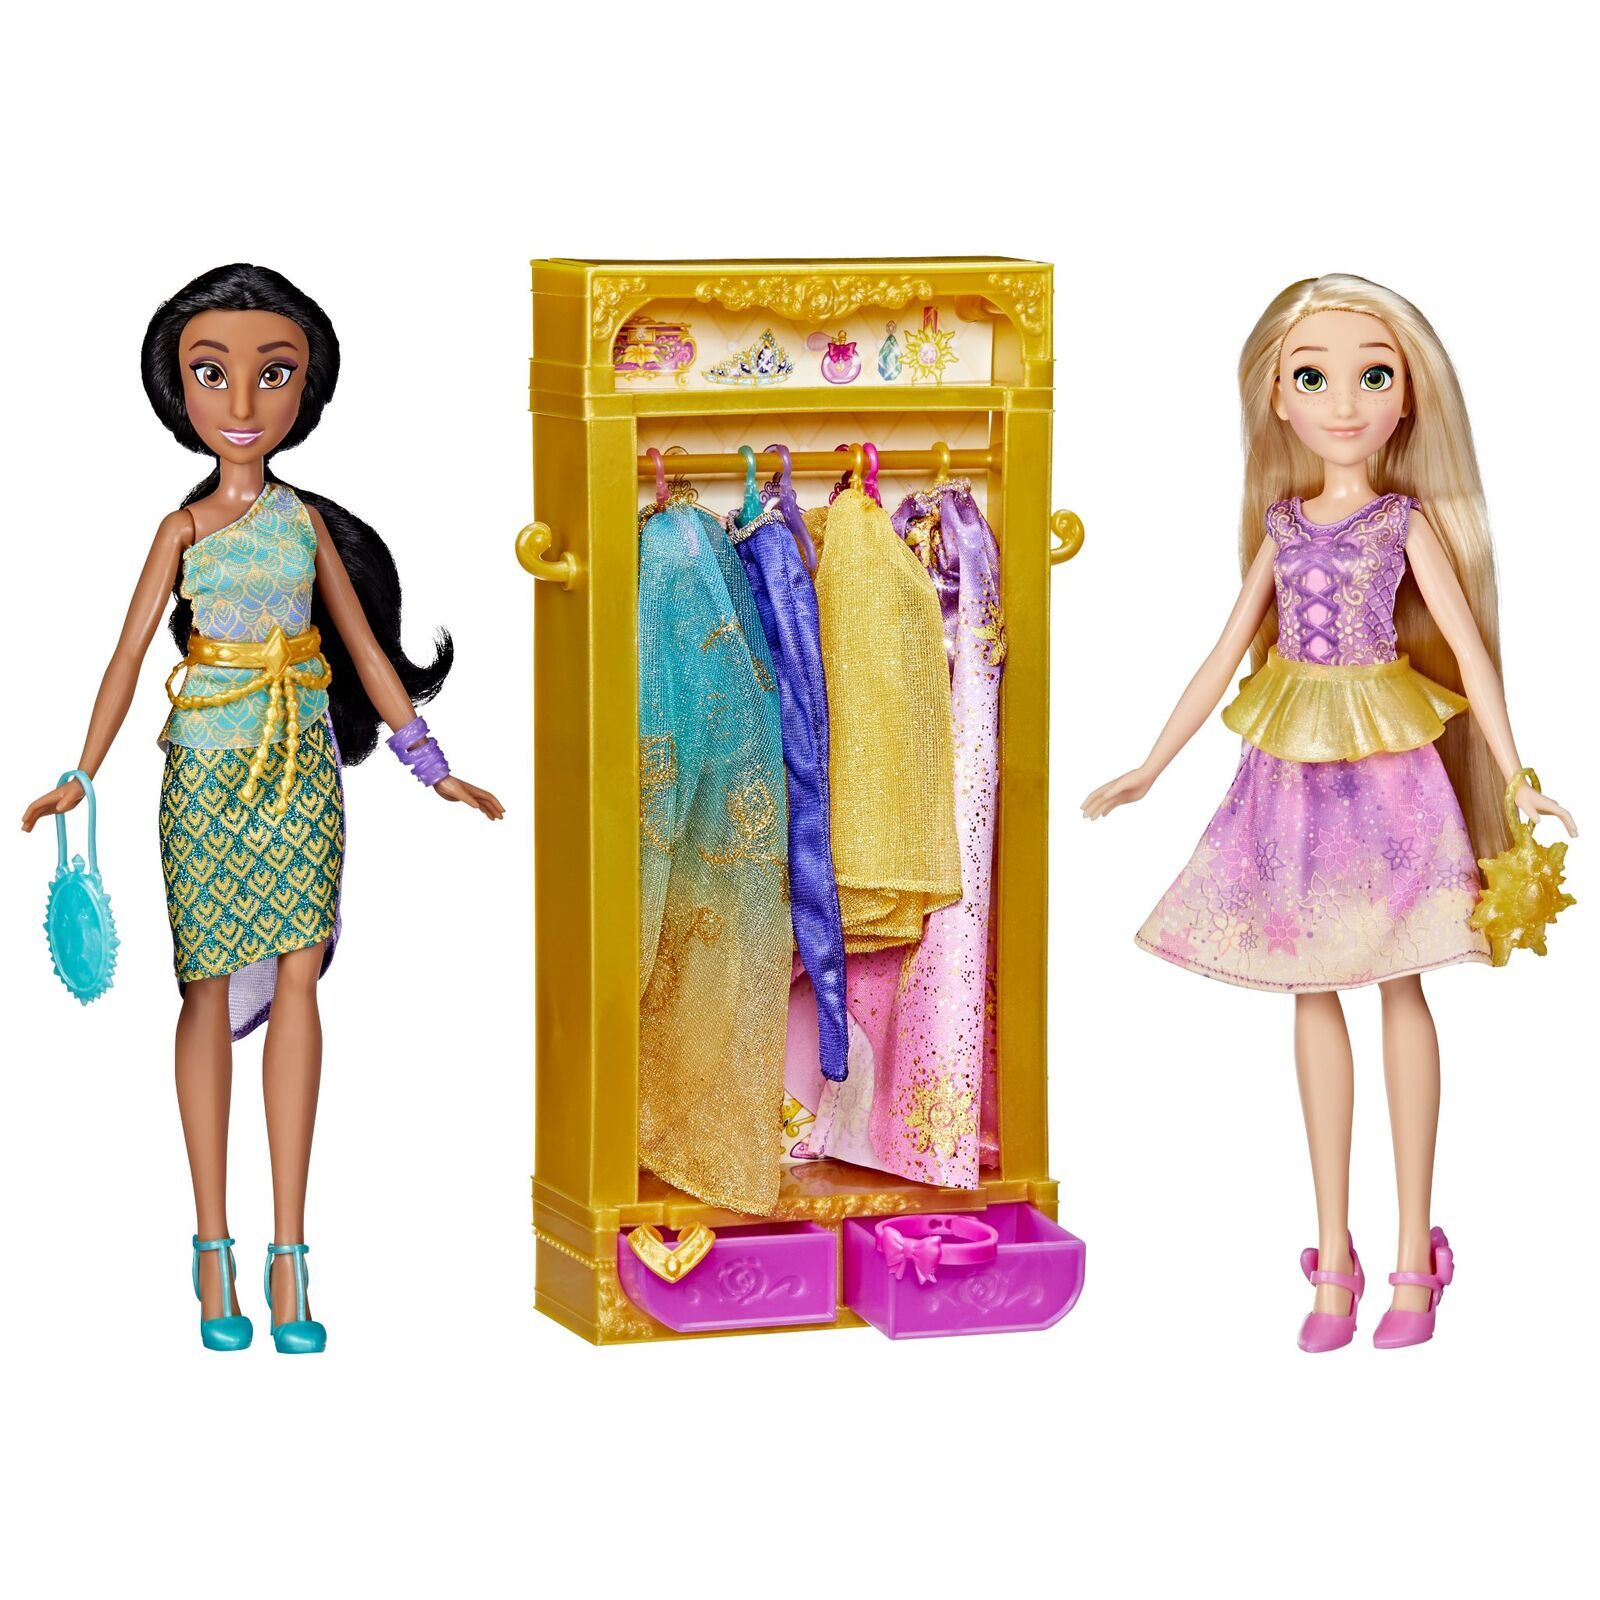 Disney Princess Life Ultimate Fashion Wardrobe At Toys R Us Regarding The Princess Wardrobes (View 12 of 15)